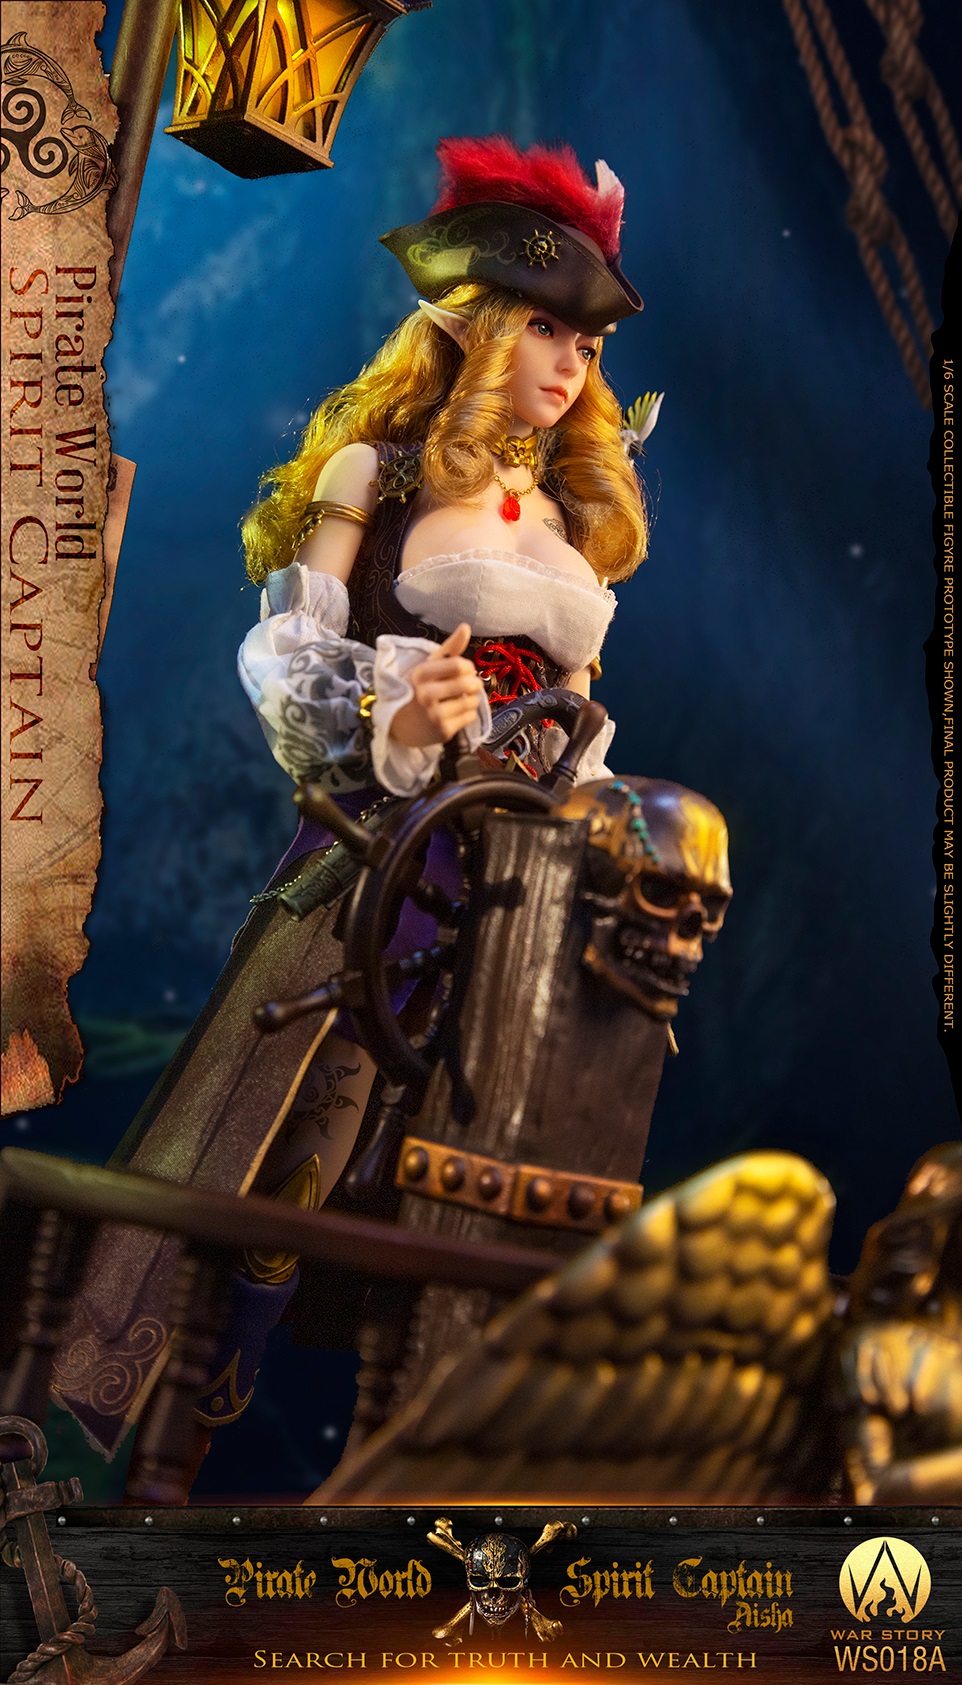 Fantasy - NEW PRODUCT: War Story: 1/6 Pirate World: Spirit Captain Aisha / Elsa Action Figure/Pirate Ship Luminous Base (WS018A/B)  10452310